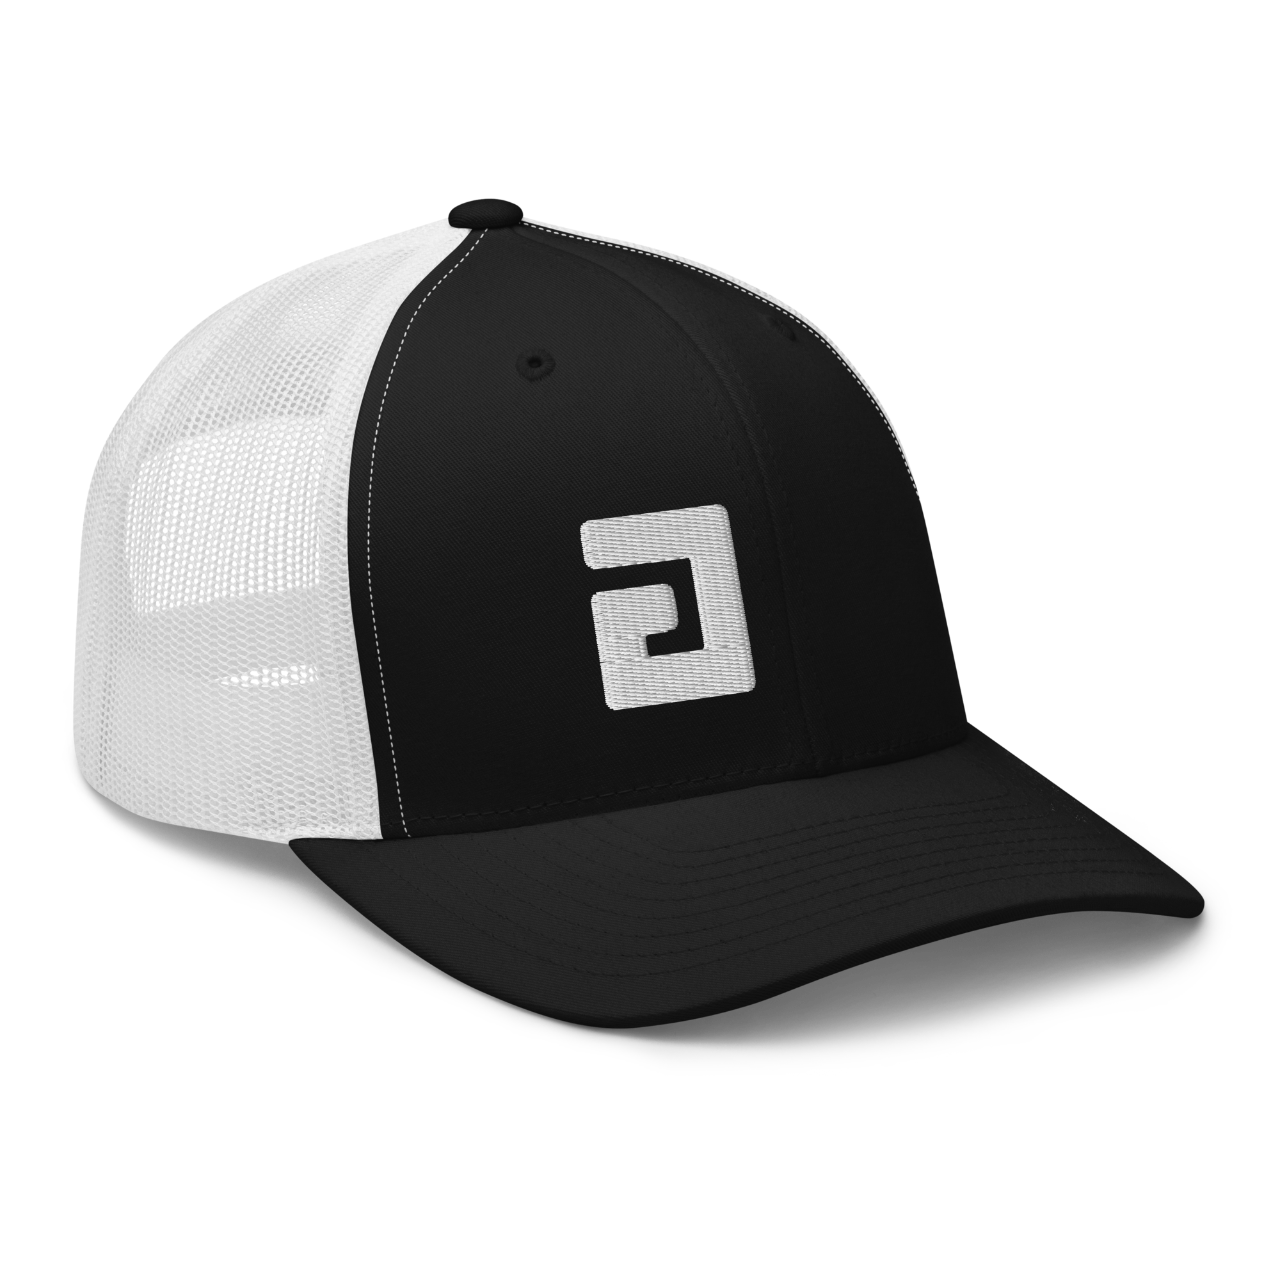 axsgtr axess electronics guitar music industry branded merchandise swag trucker cap hat black white white